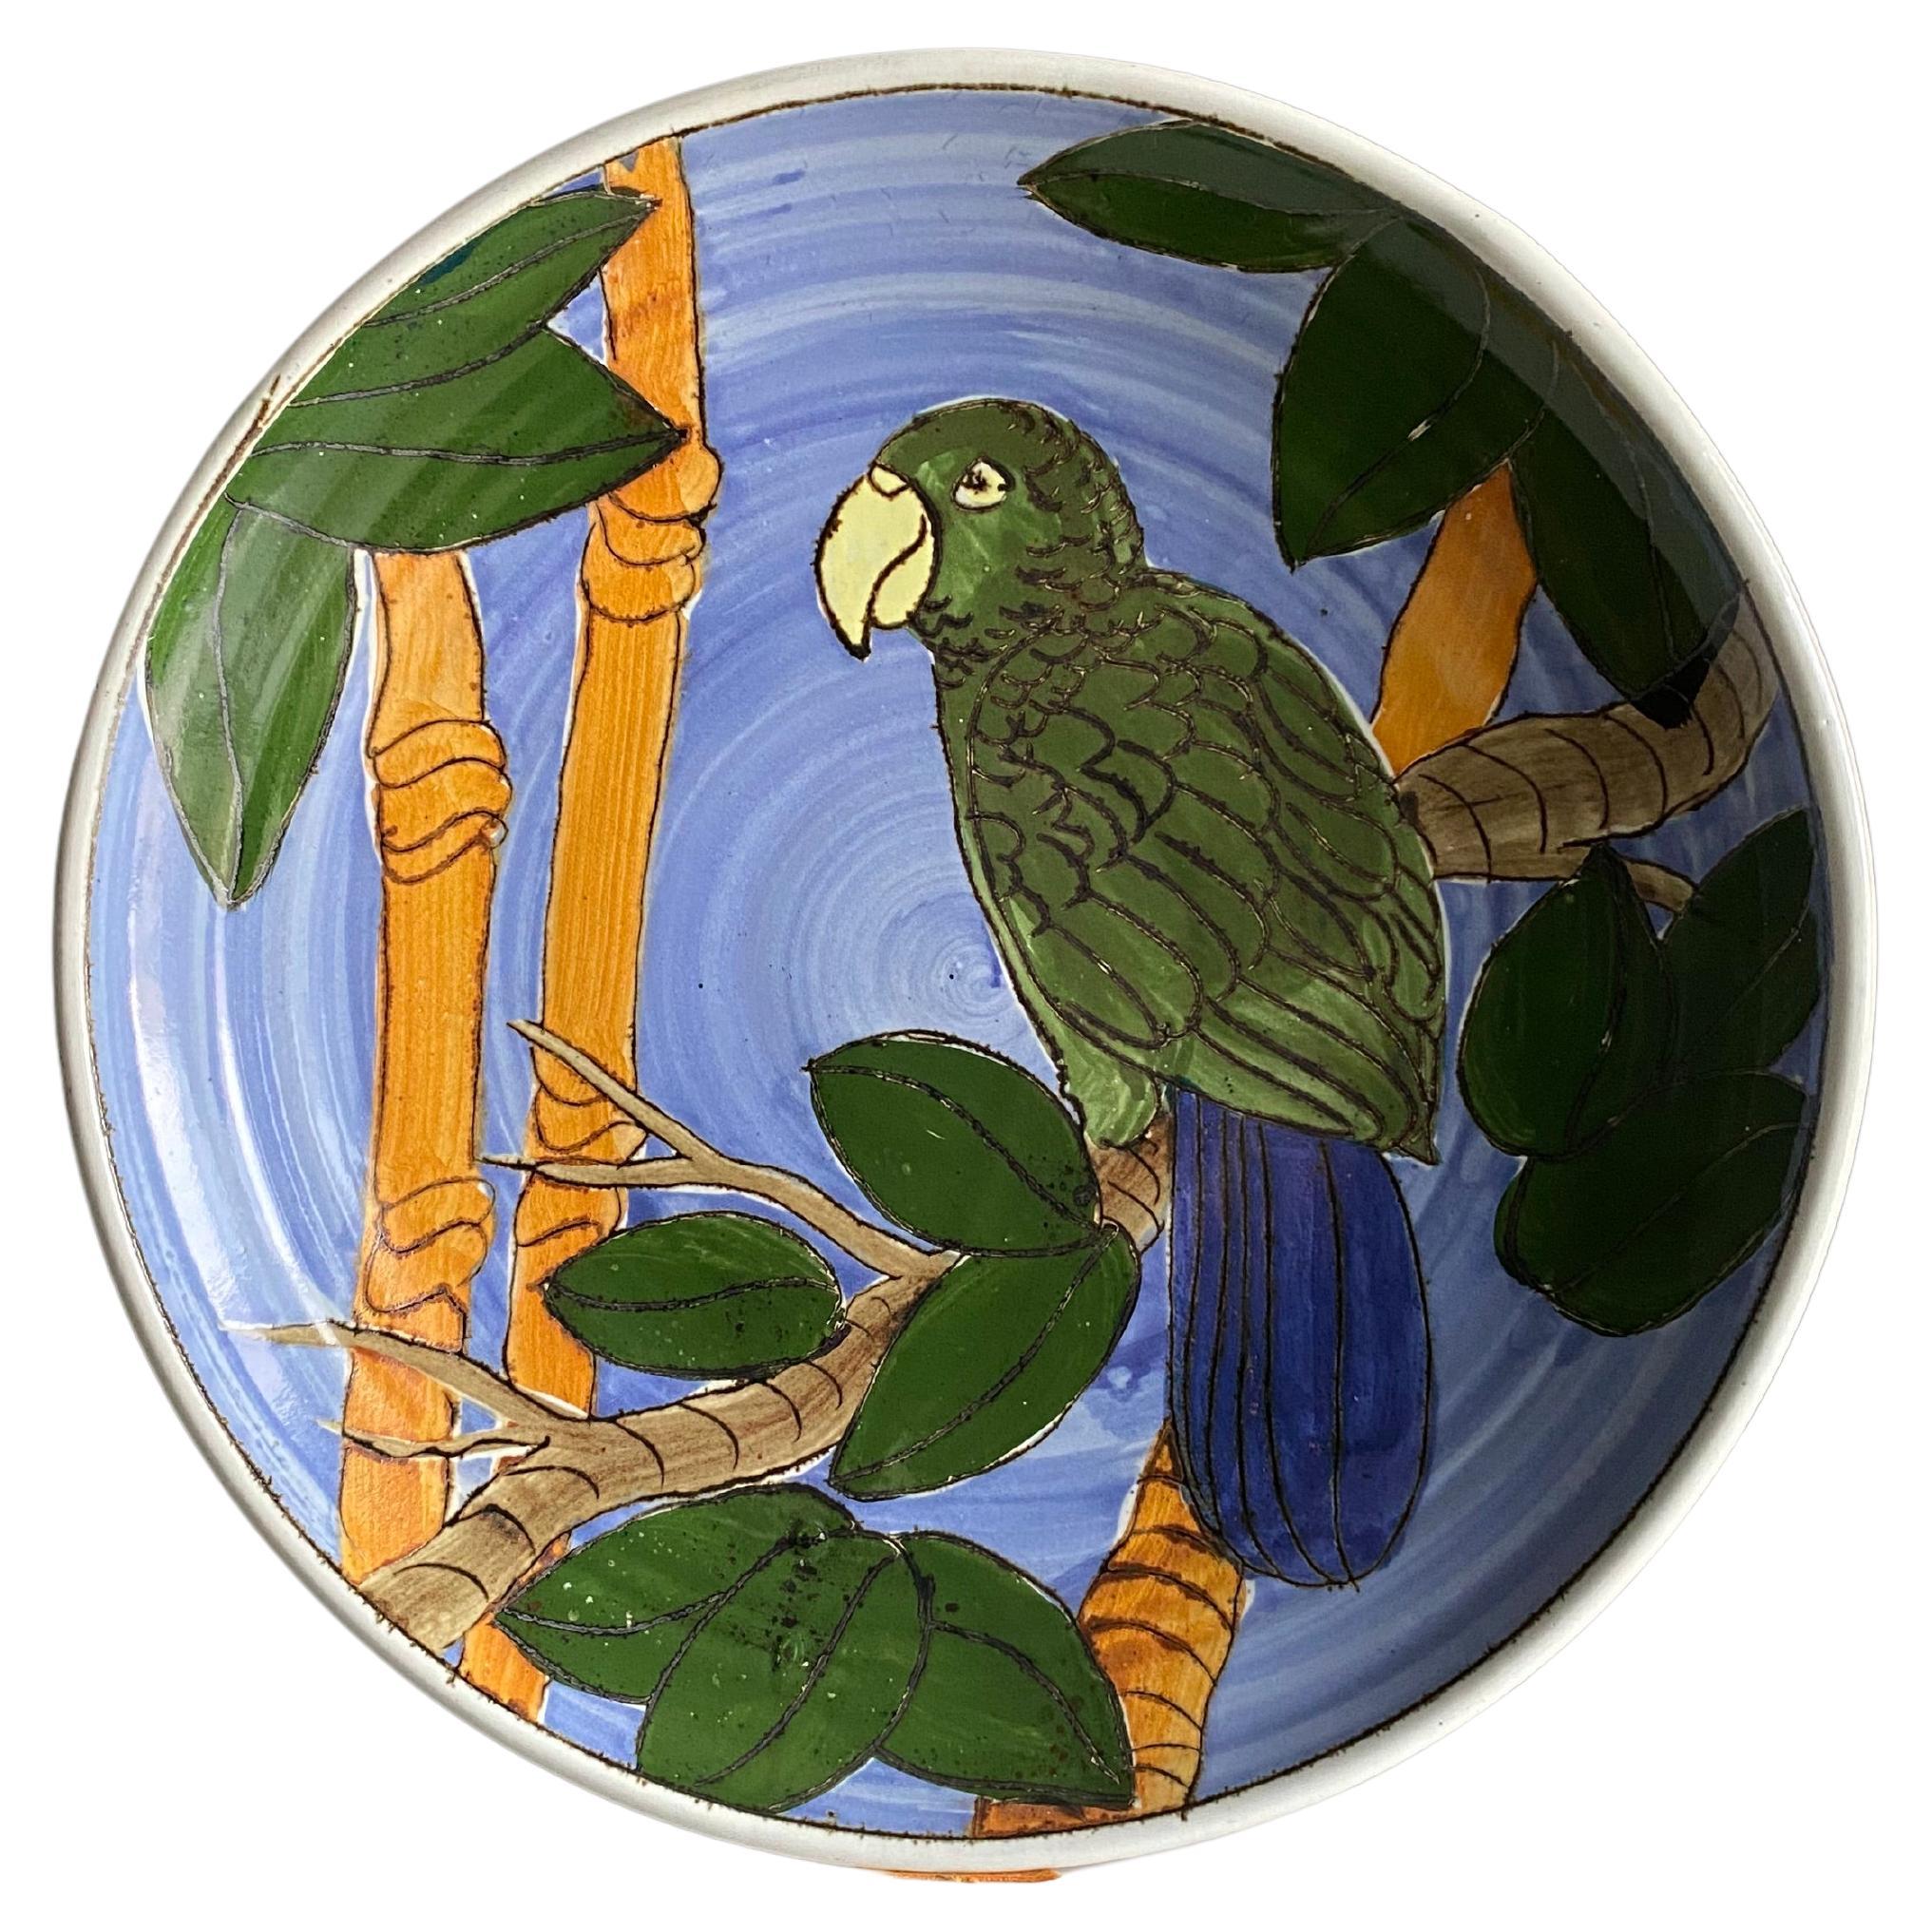 Großformatige exotische Vogel-Keramik-Platte / Teller 